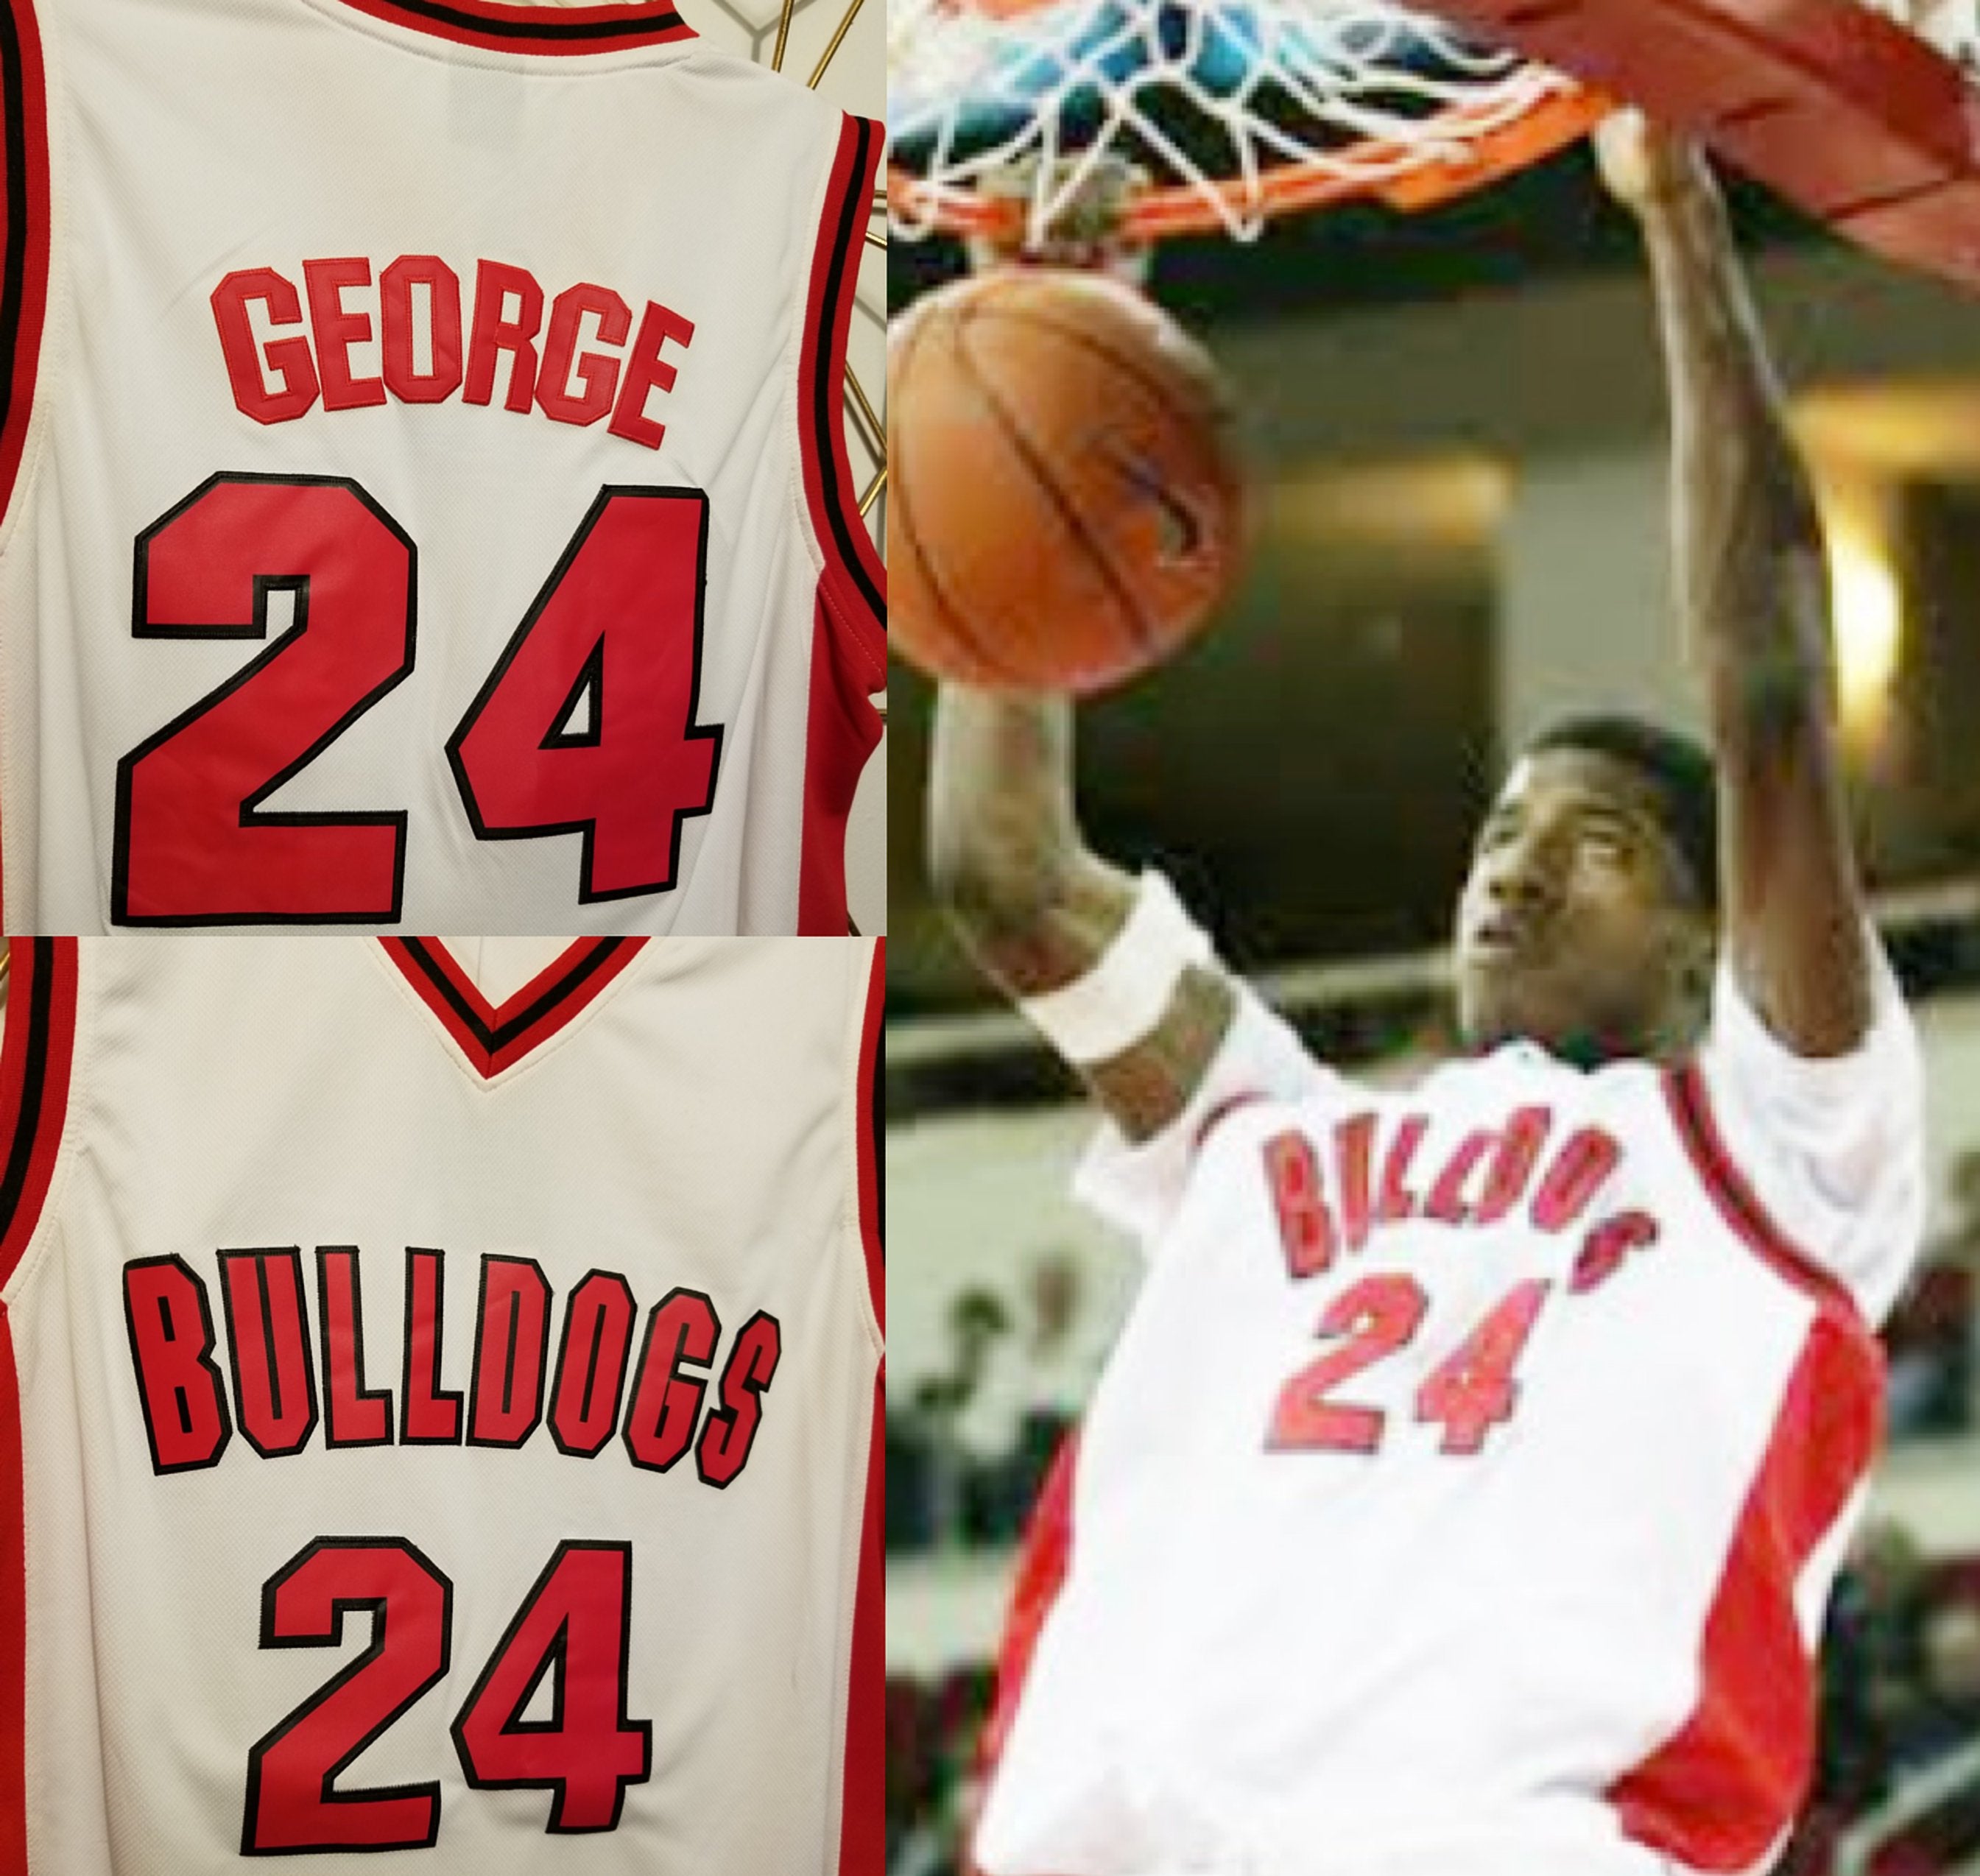 JordansSecretStuff Paul George Bulldogs High School Basketball Jersey Pg13 Throwback Retro Jersey M / Red